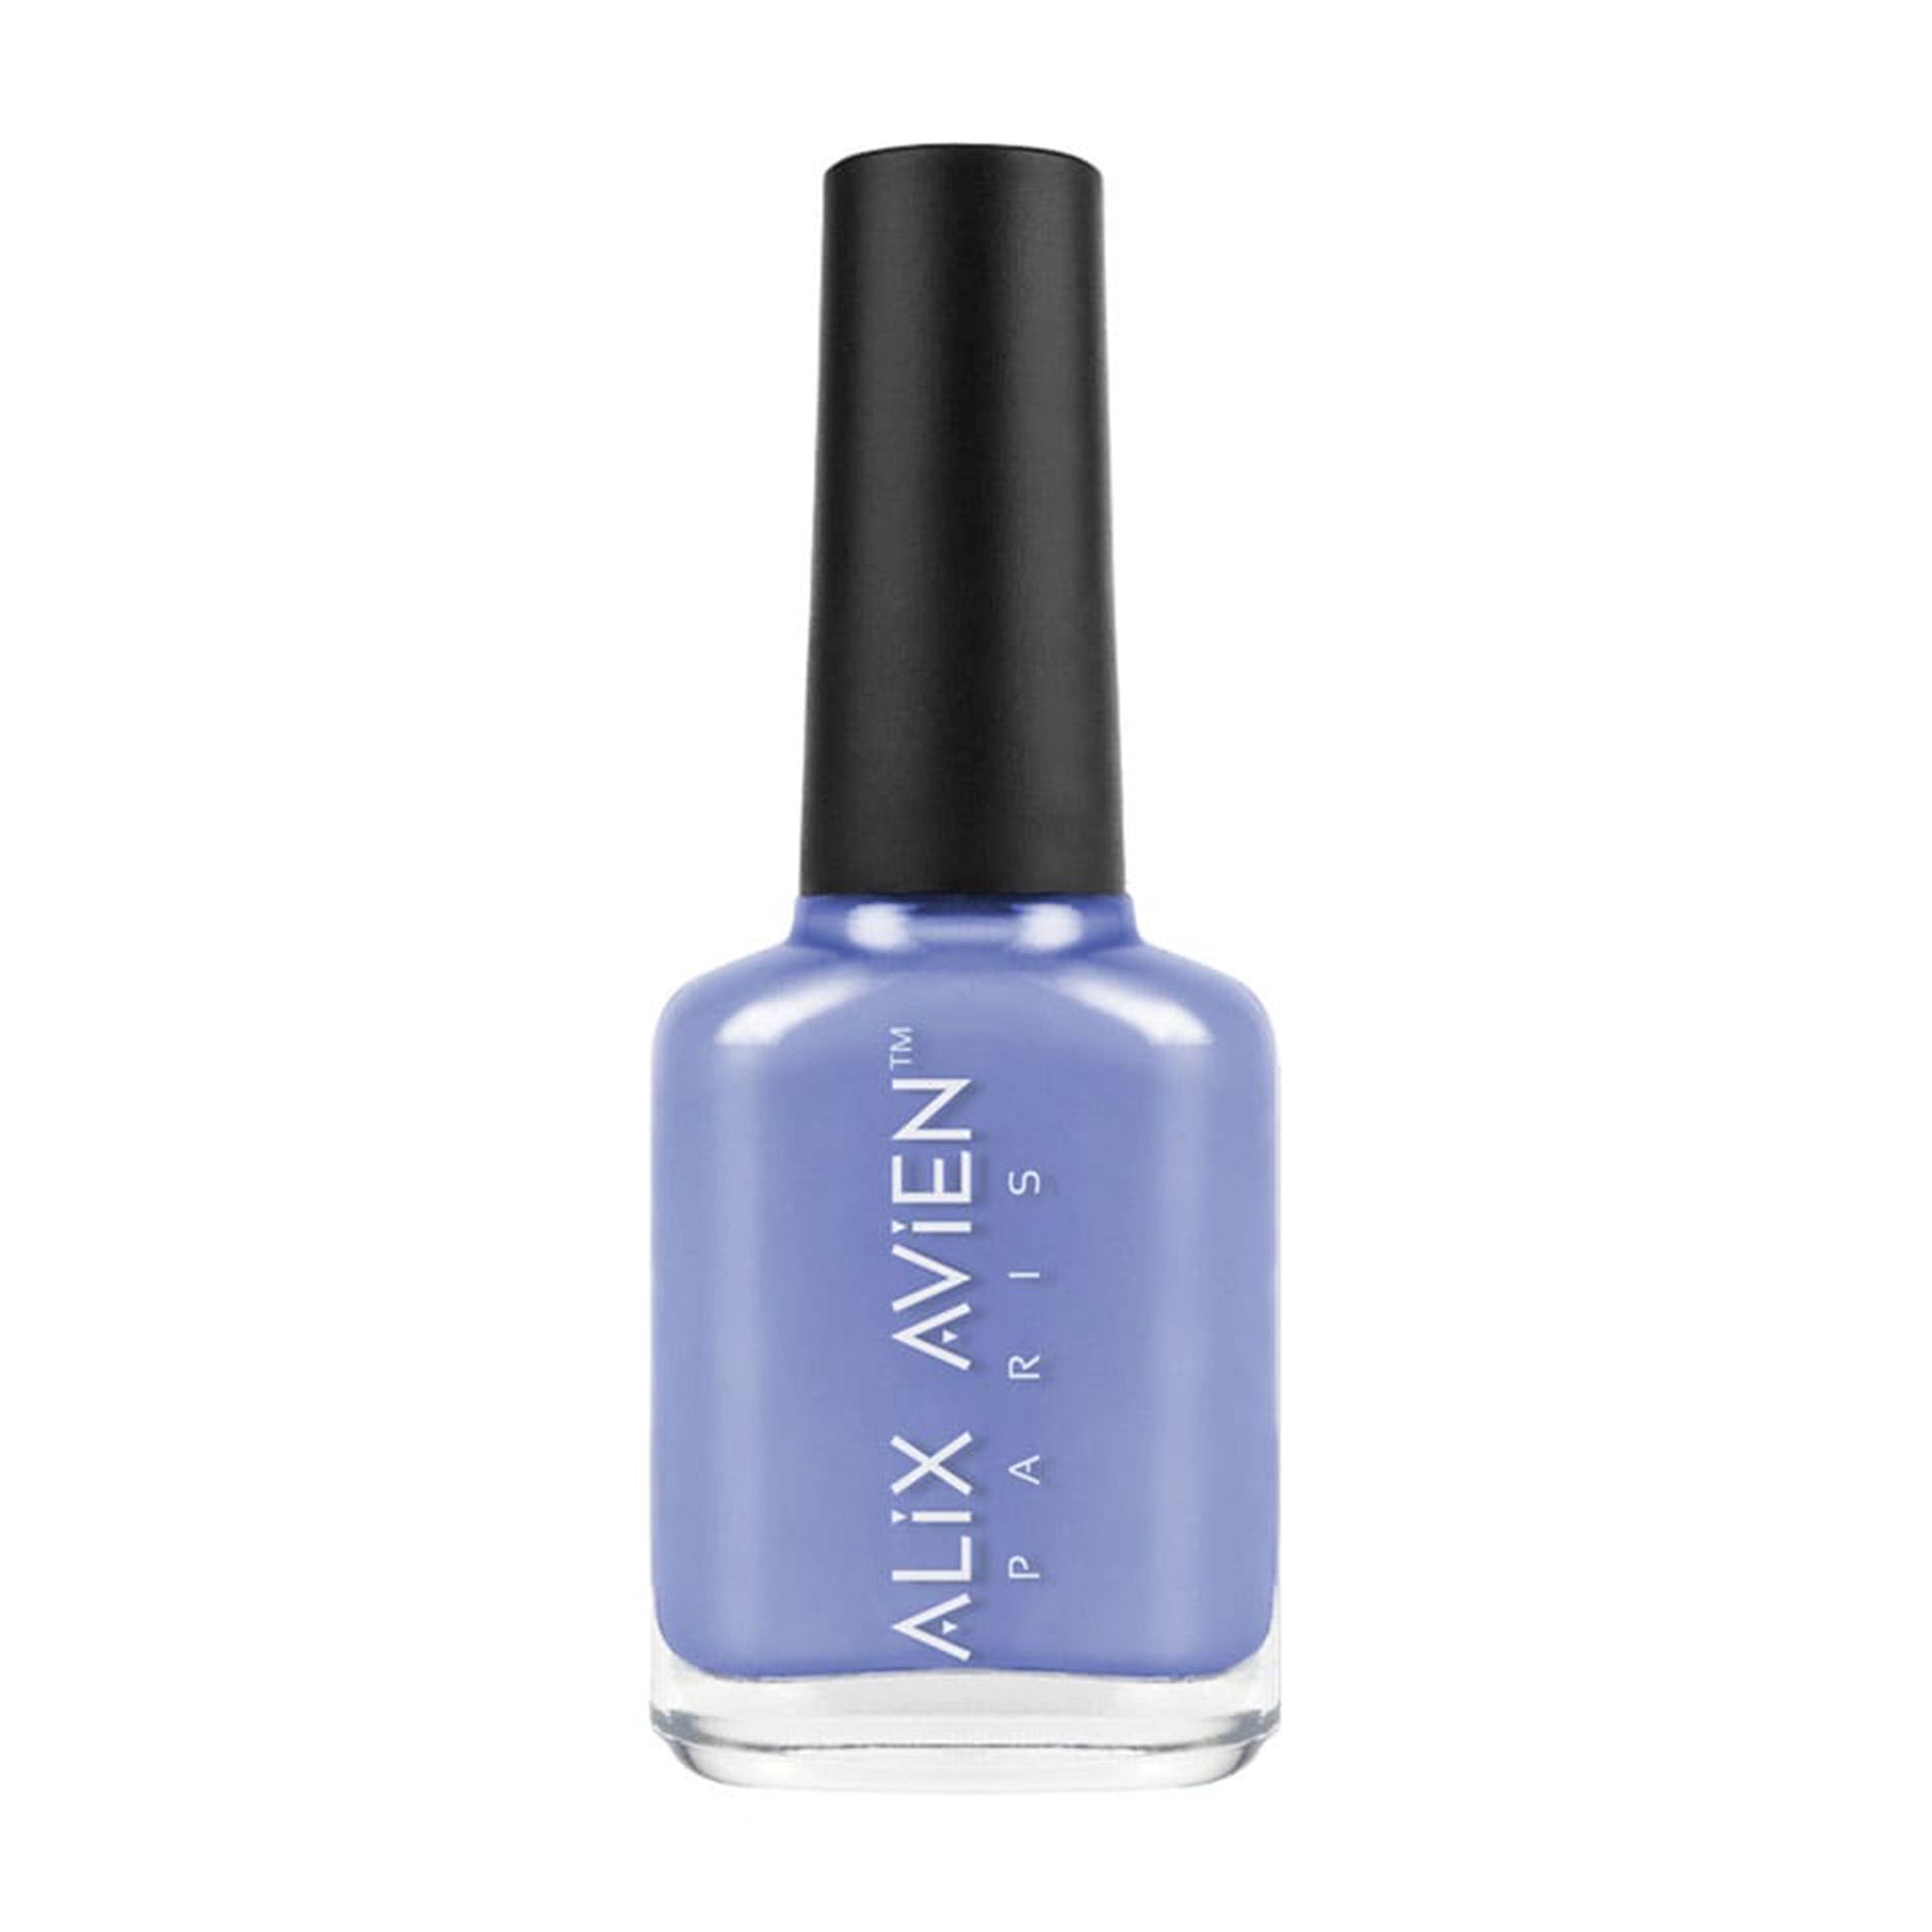 Alix Avien - Nail Polish No.73 (Breezy Blue)